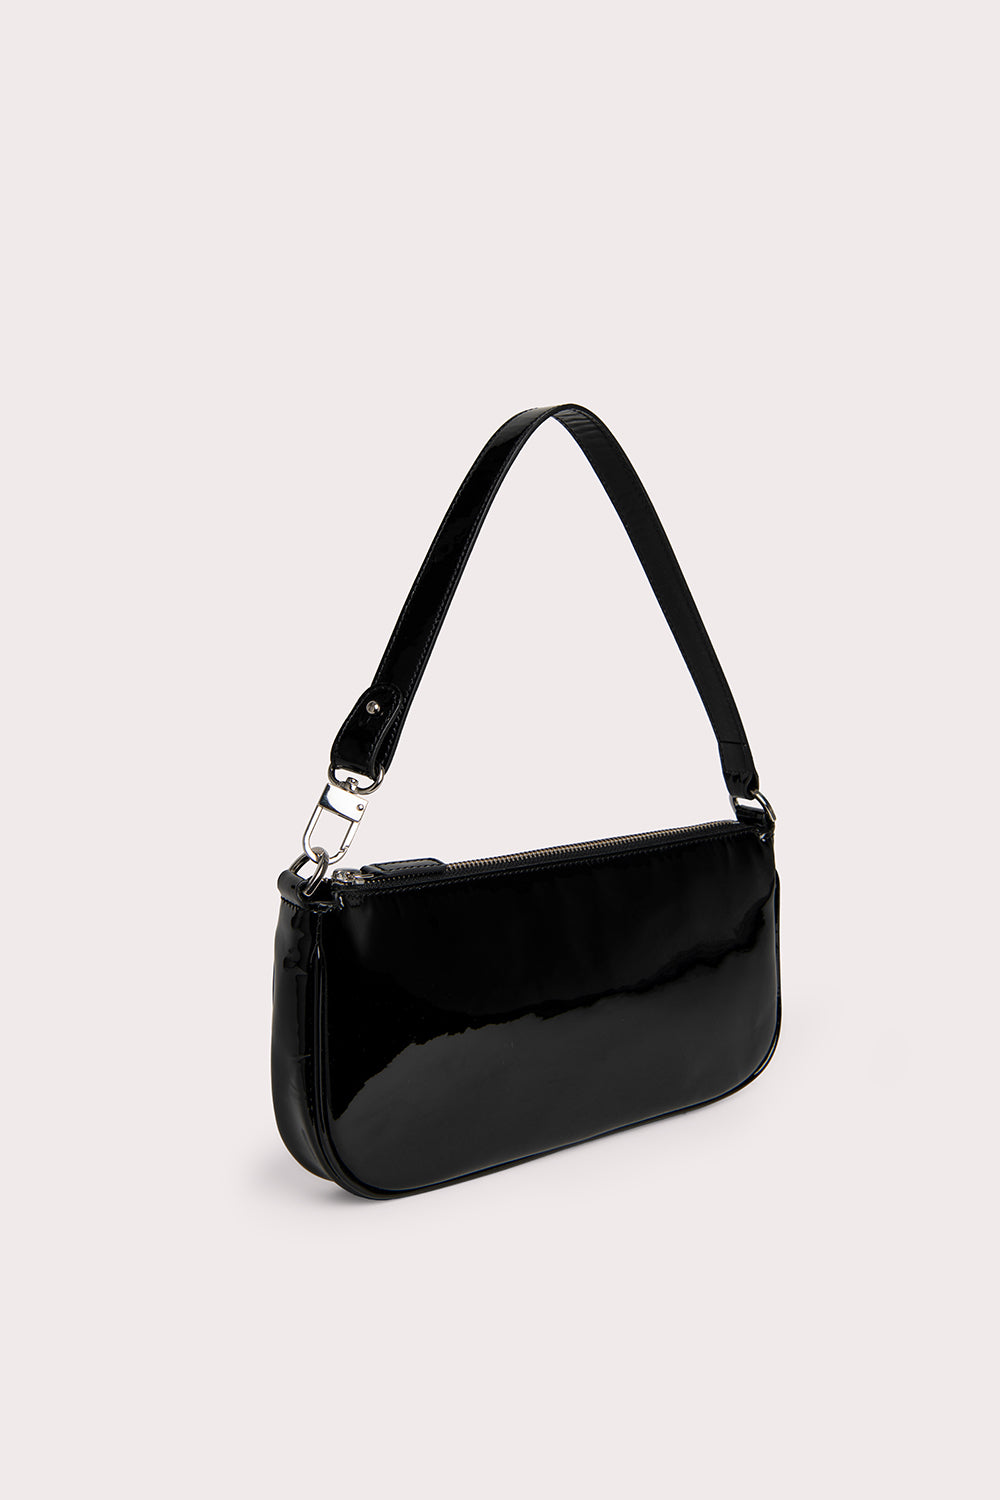 Black Patent Leather Handbag